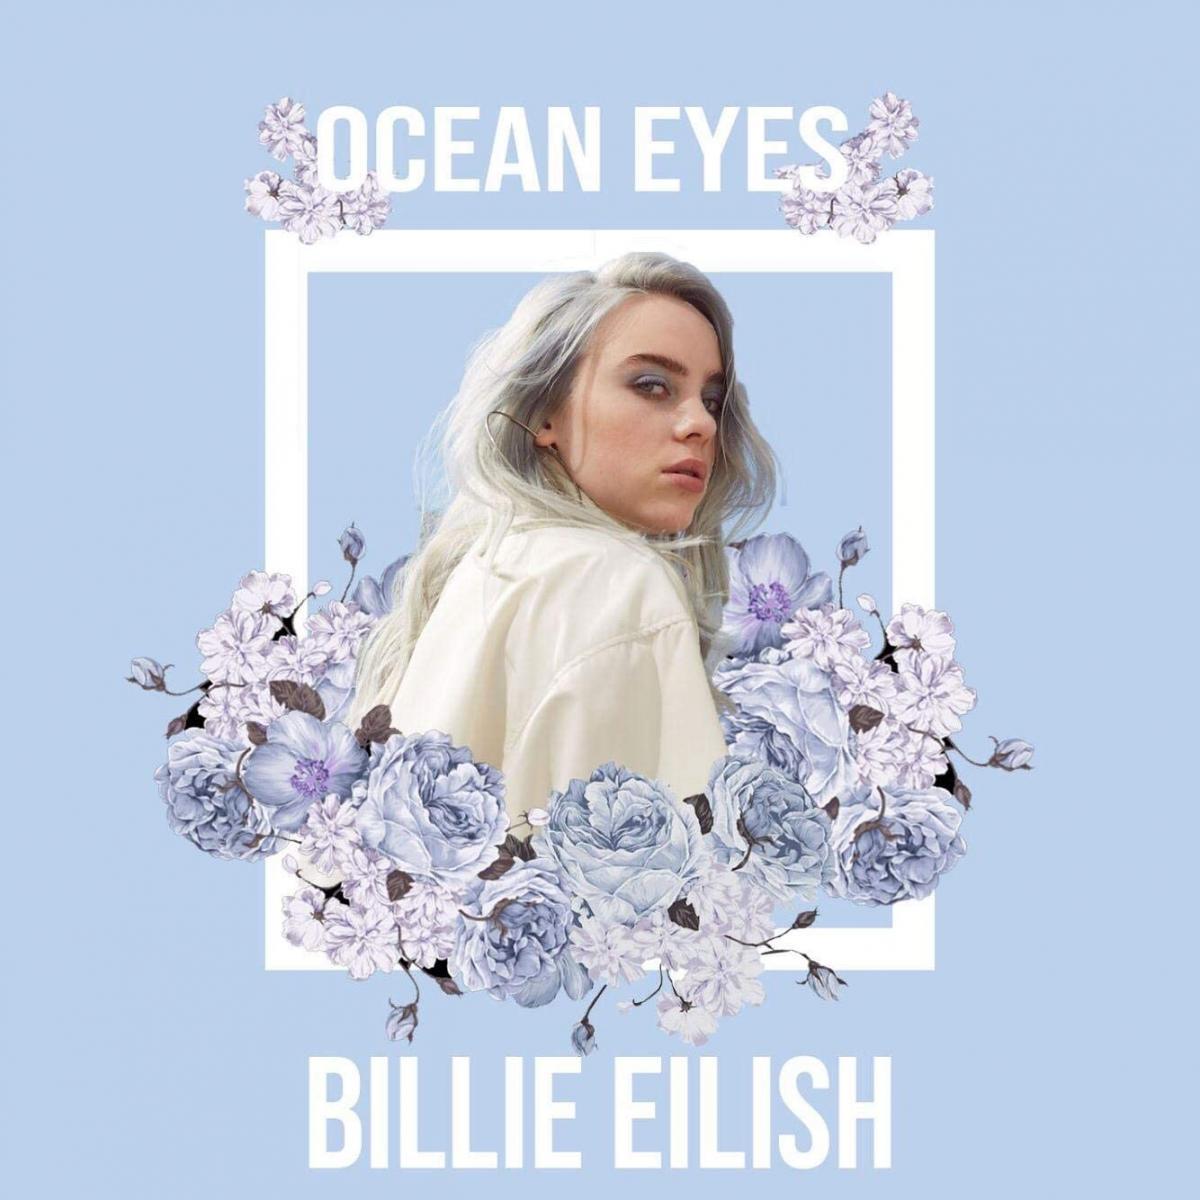 Billie Eilish with grey hair and blue eyeshades for ocean eyes  